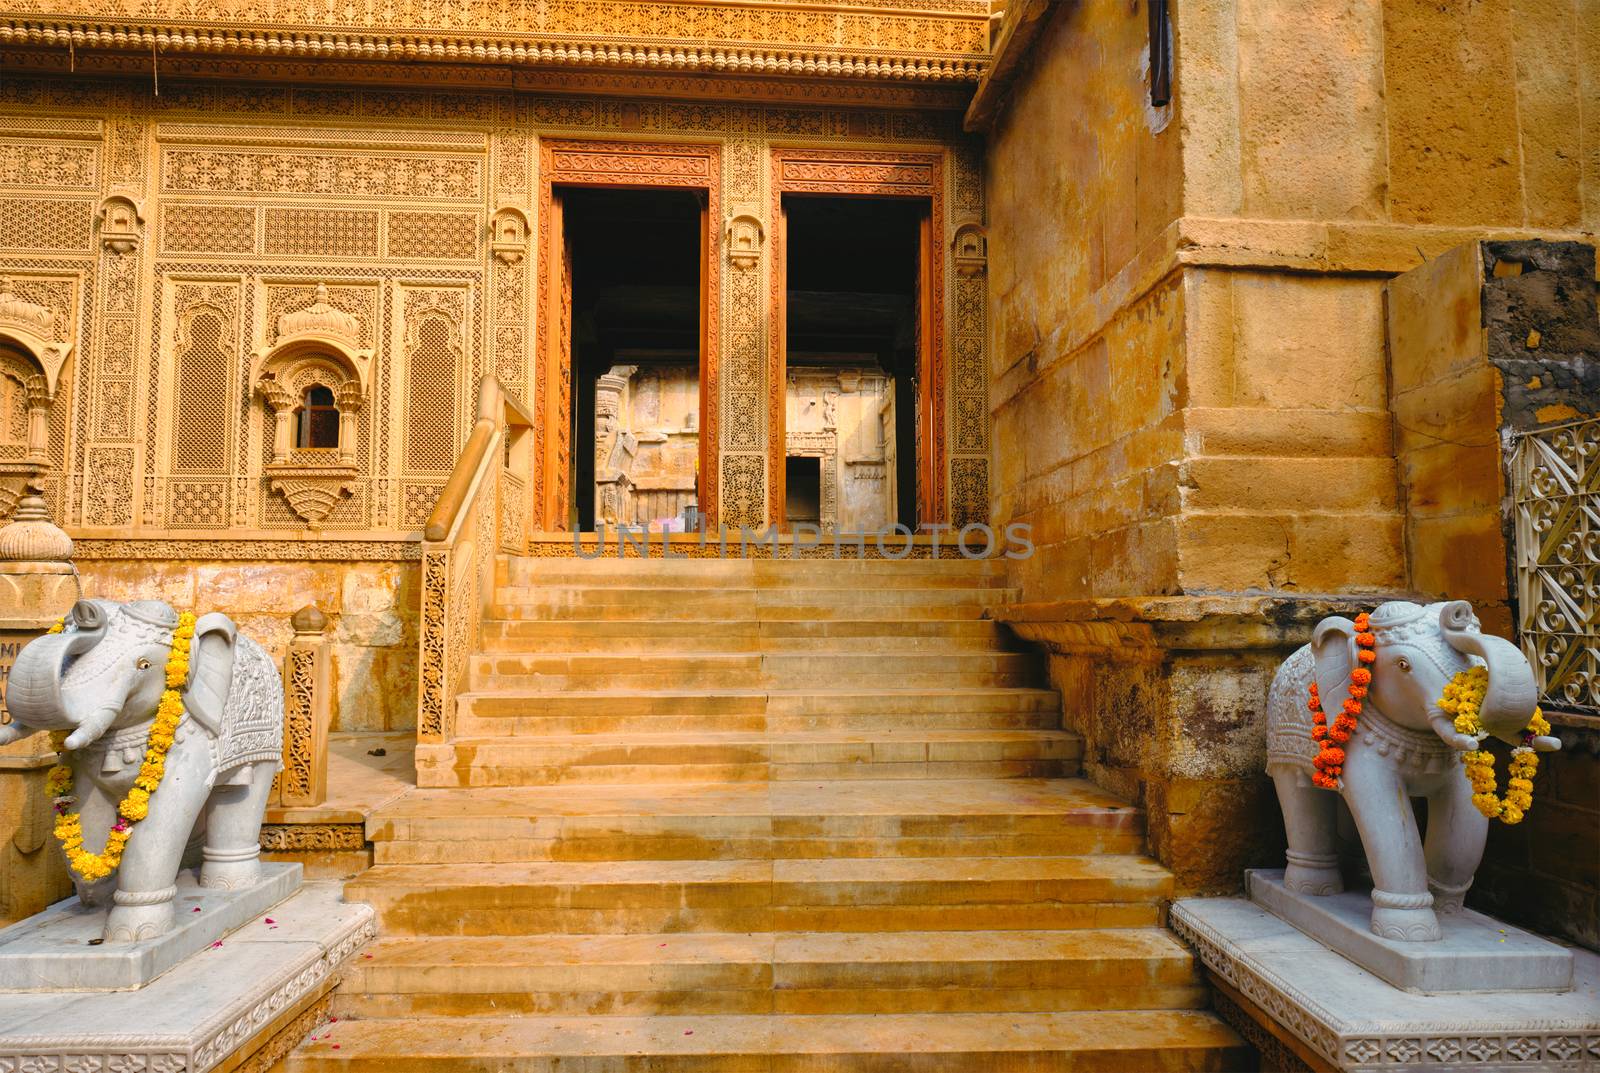 Laxminath Temple inside Jaisalmer Fort. Jaisalmer, Rajasthan, India by dimol